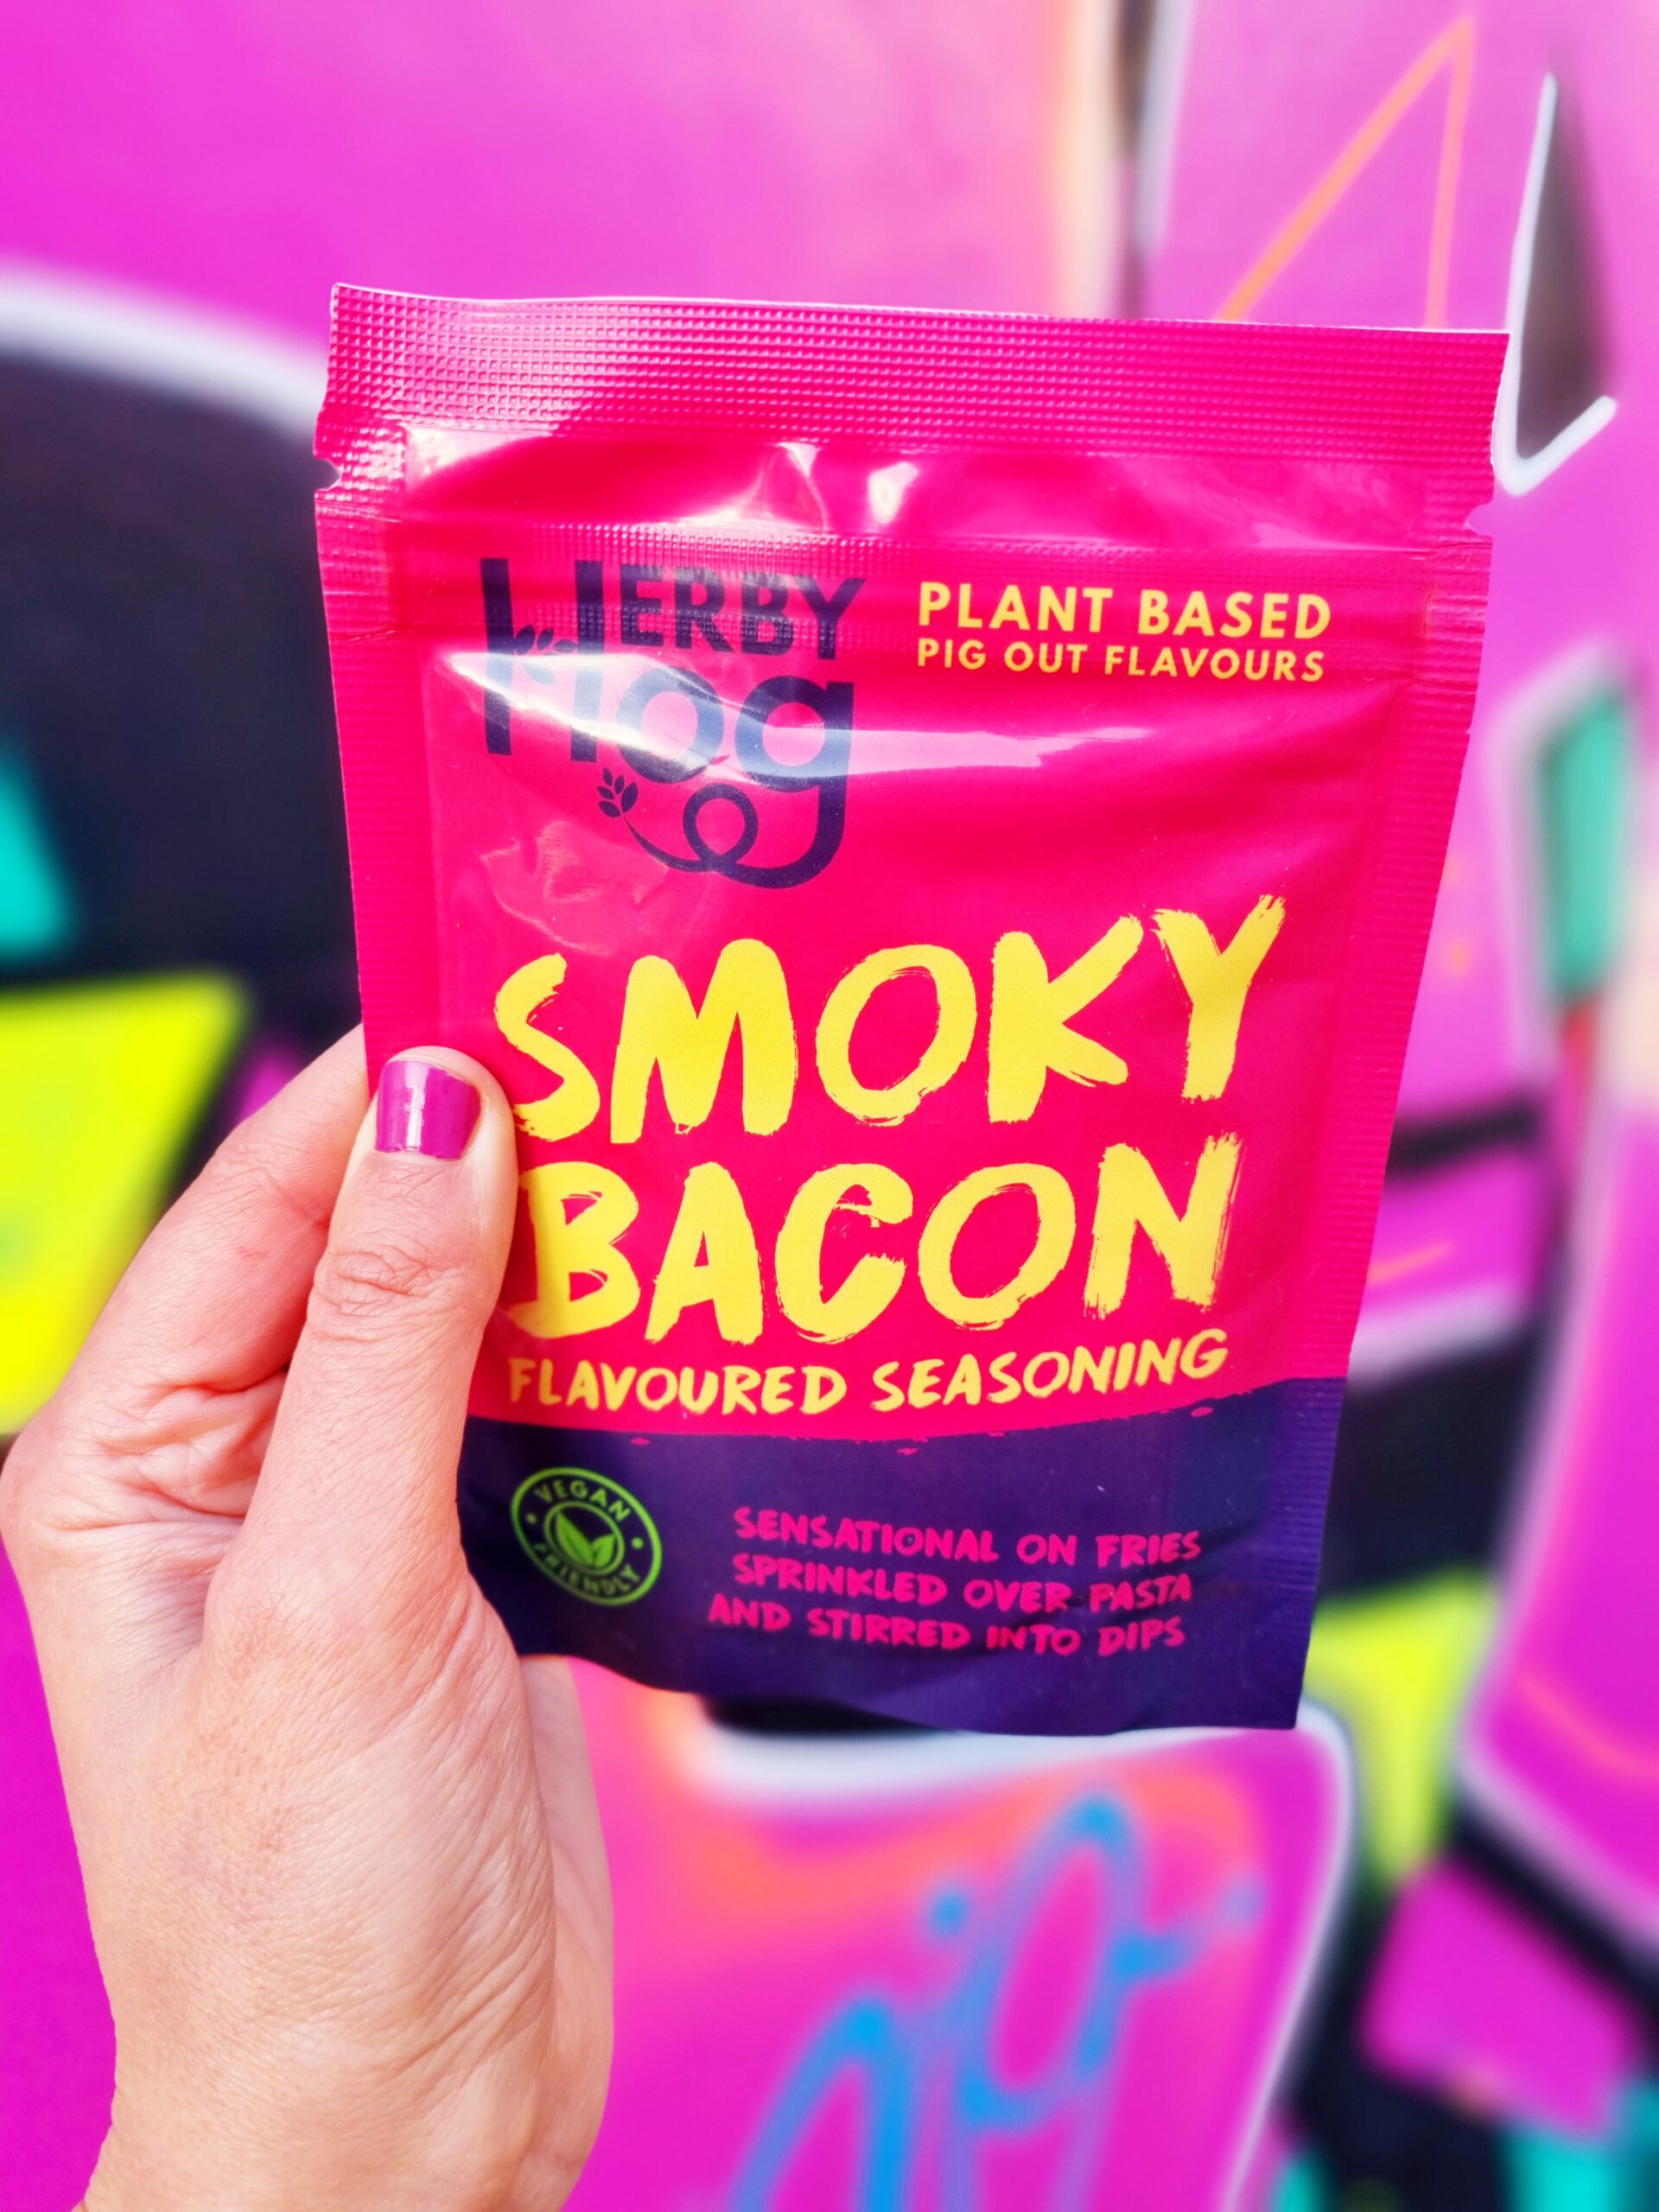 <img src="herby.jpg" alt="herby hog smoky bacon seasoning vegan"/> 